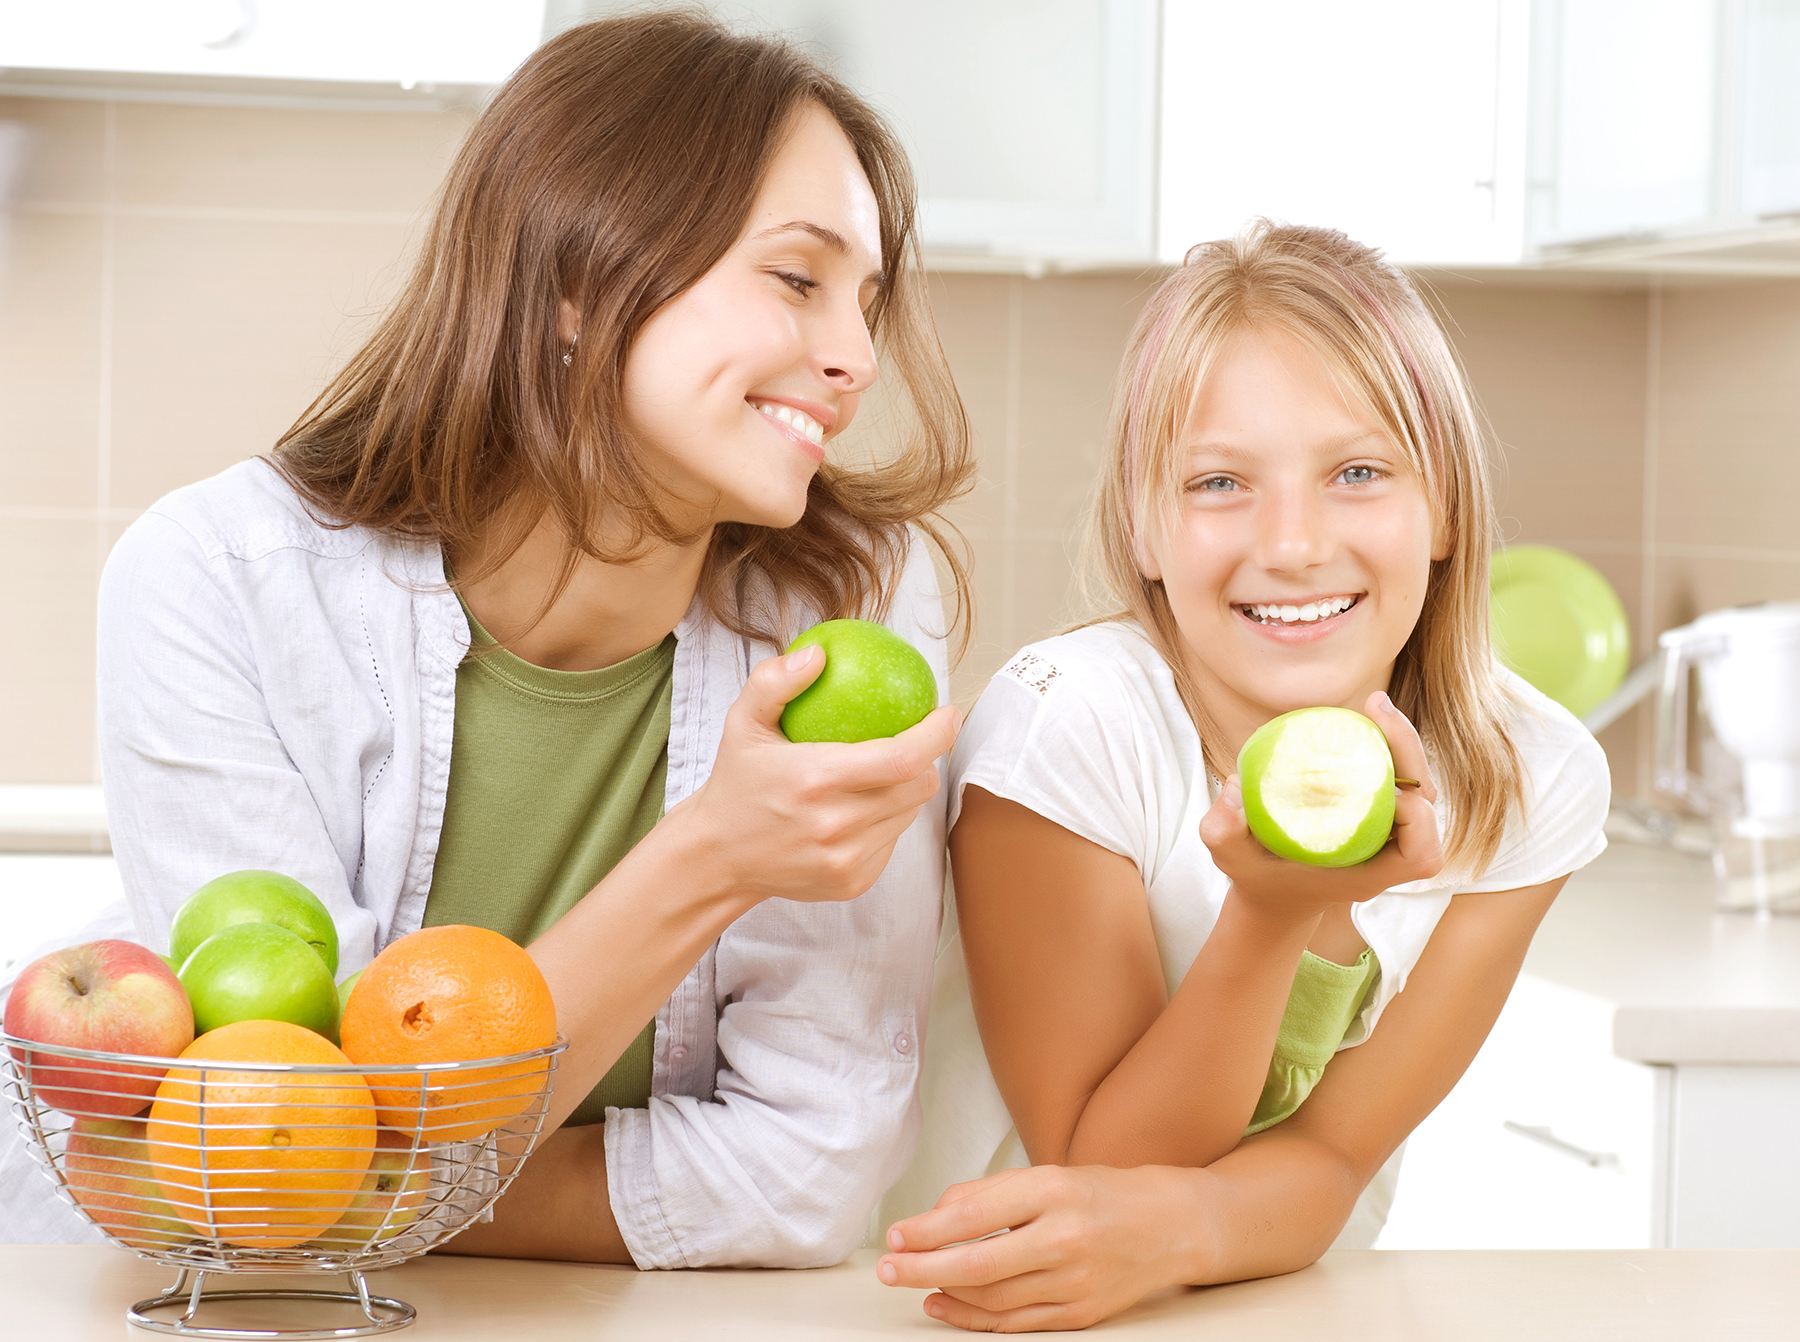 How can parents help kids foster positive attitudes towards food